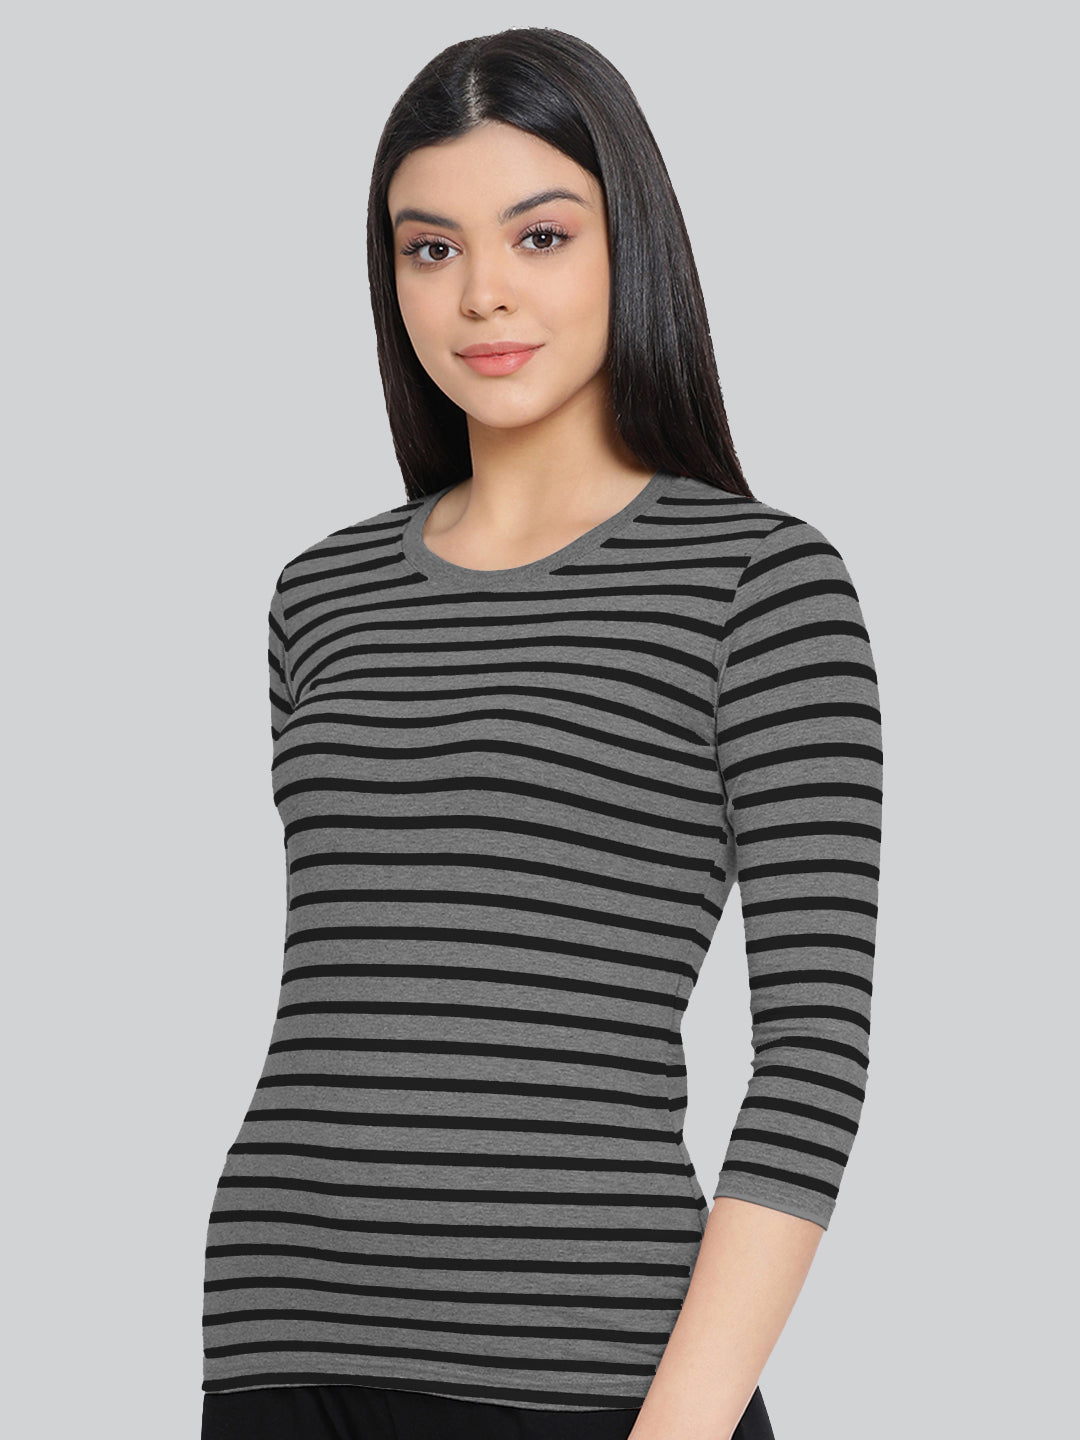 Grey Base with Black Stripes Round Neck 3/4 Sleeve T-Shirt #408